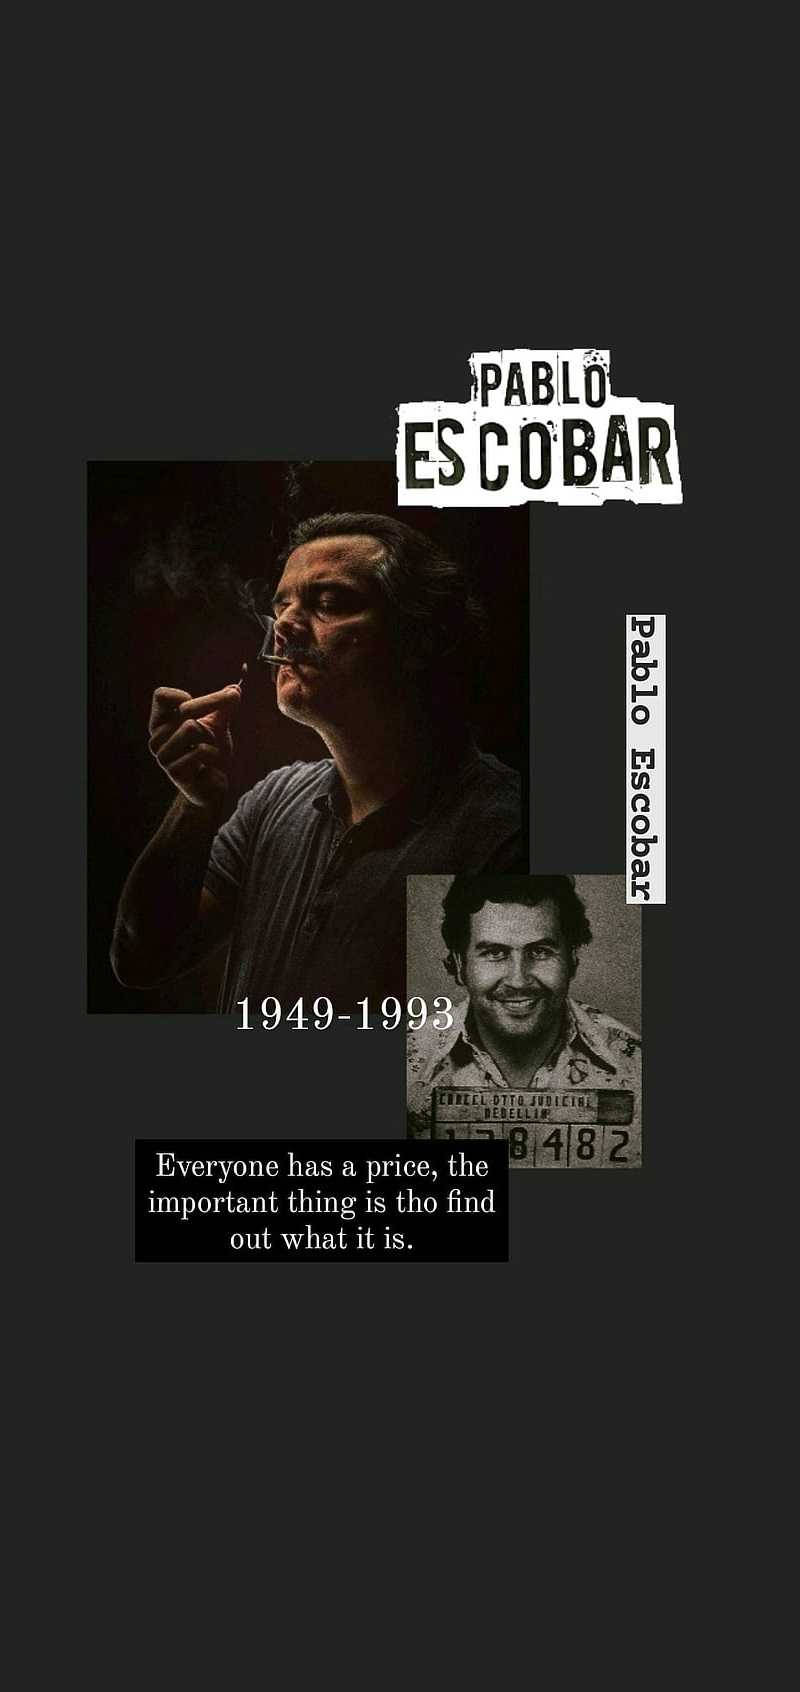 The Controversial Figure Pablo Escobar Background